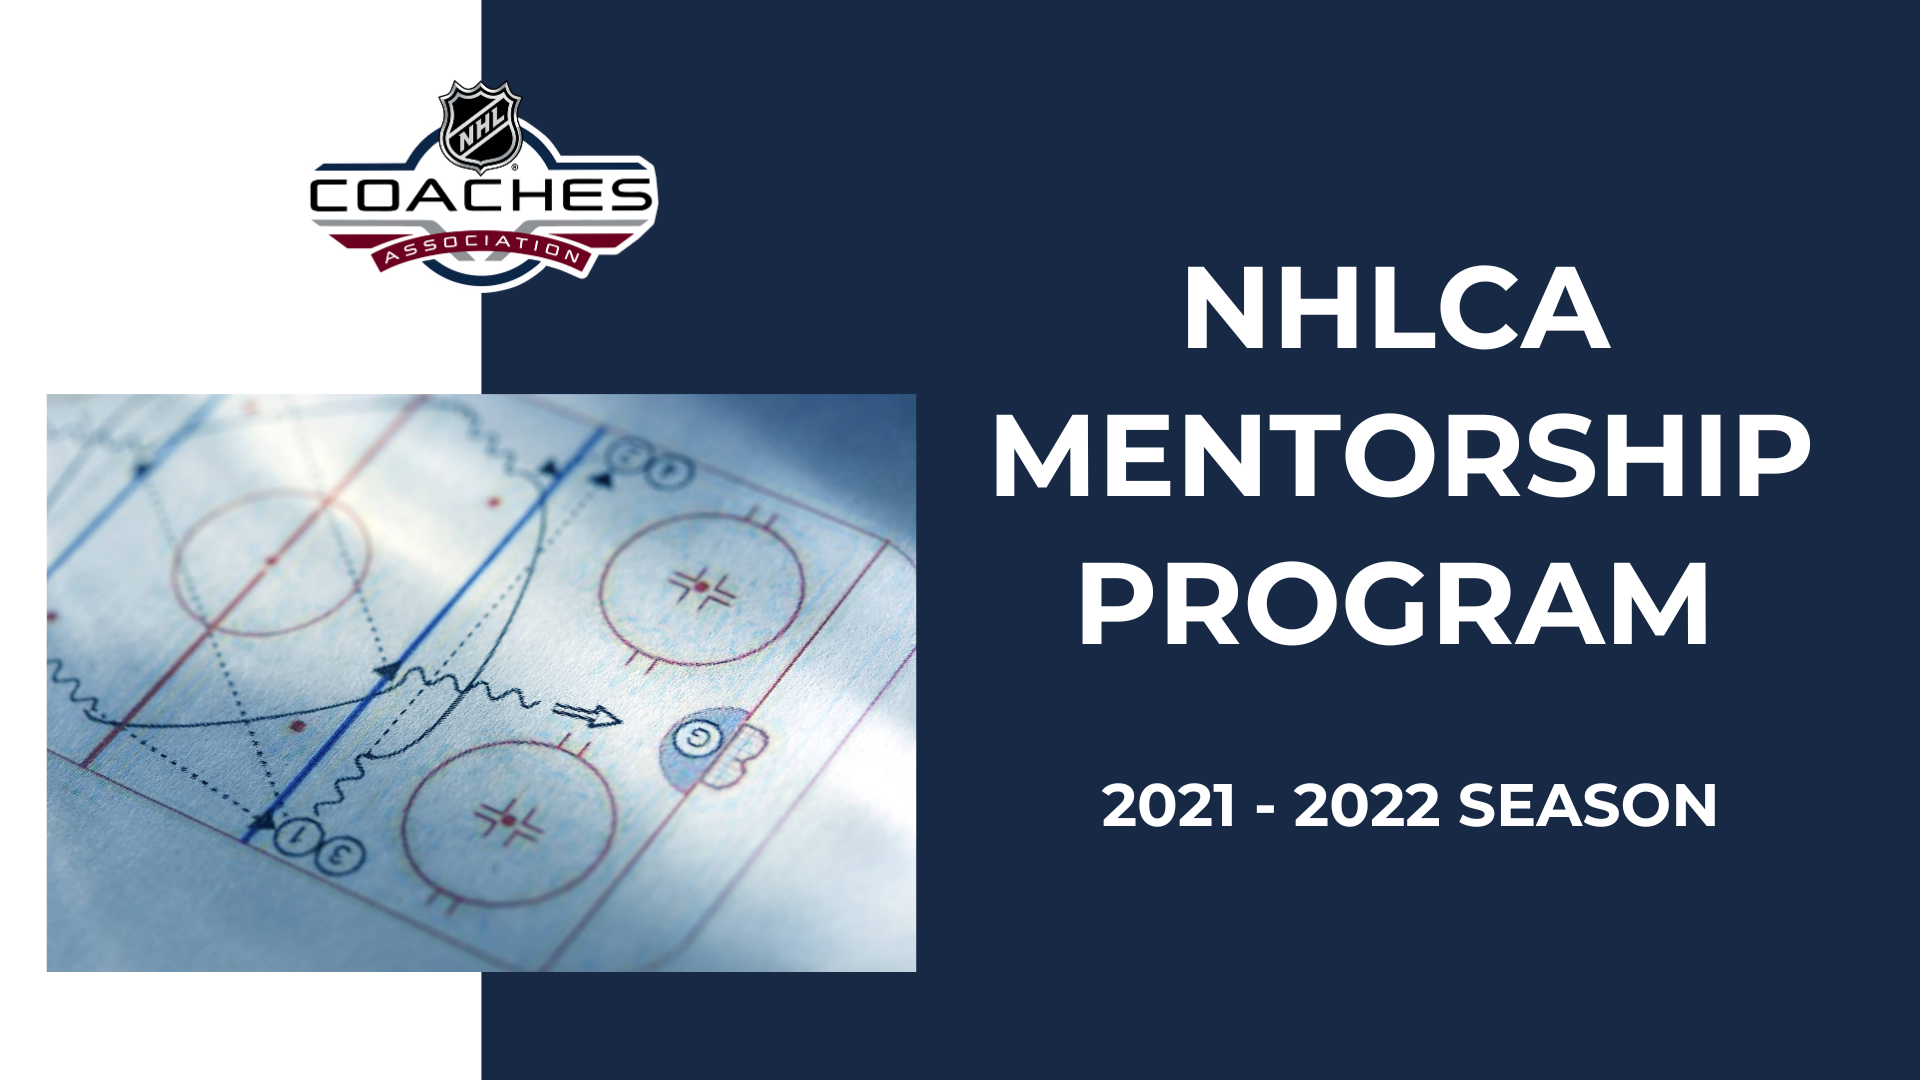 NHLCA Mentorship Program: 2021-2022 Season